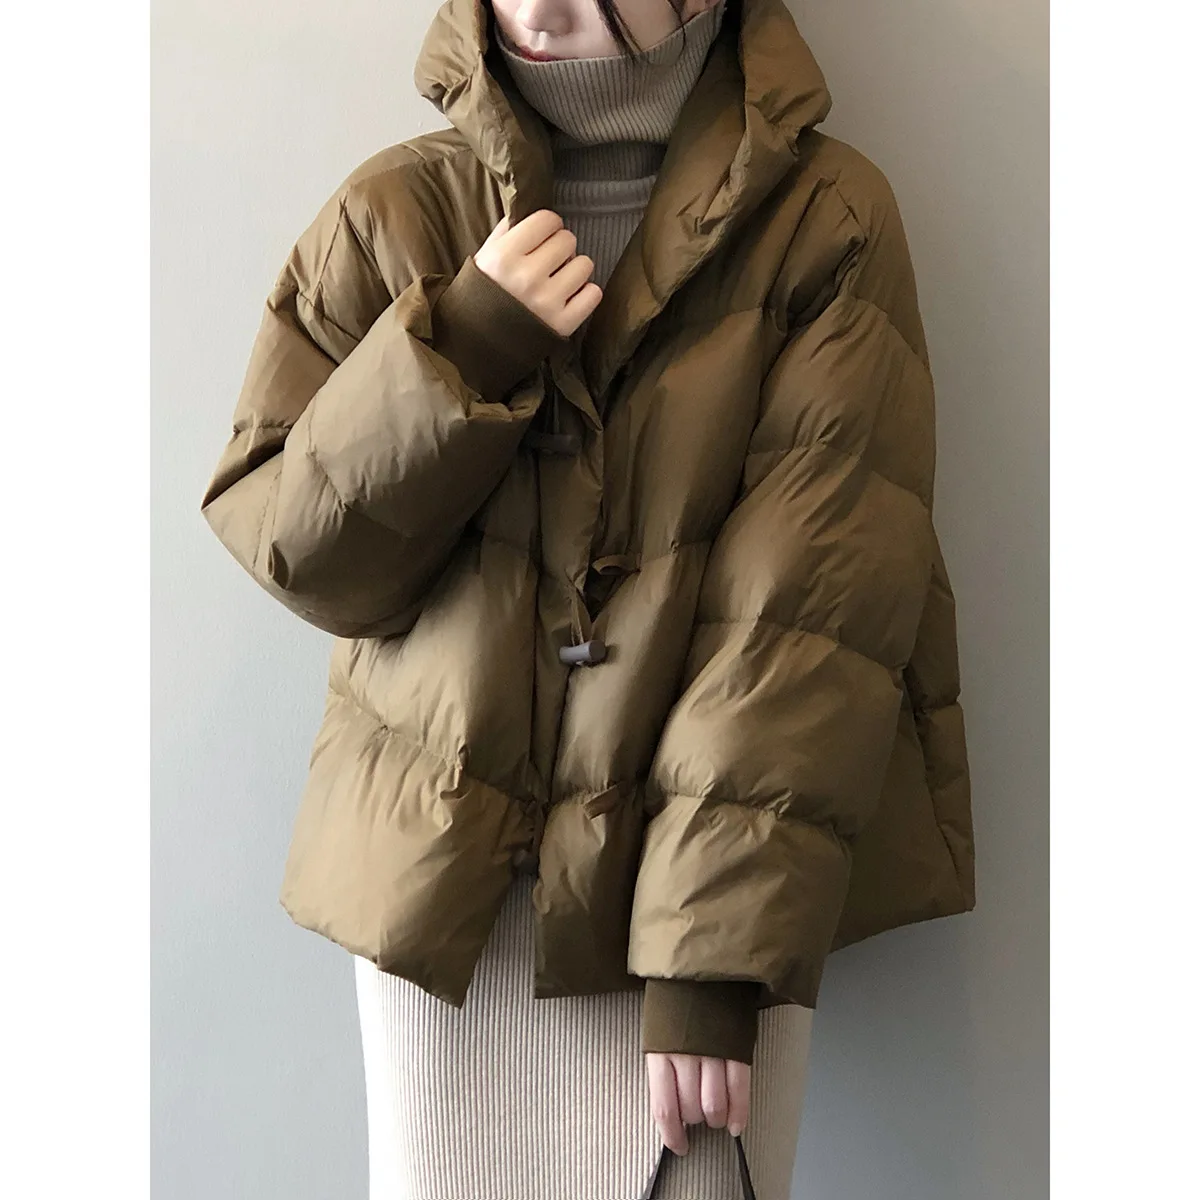 Magnetic Buckle Hooded Down Jacket Female 2022 Winter New Loose Cowl Buckle Warm Jacket Female